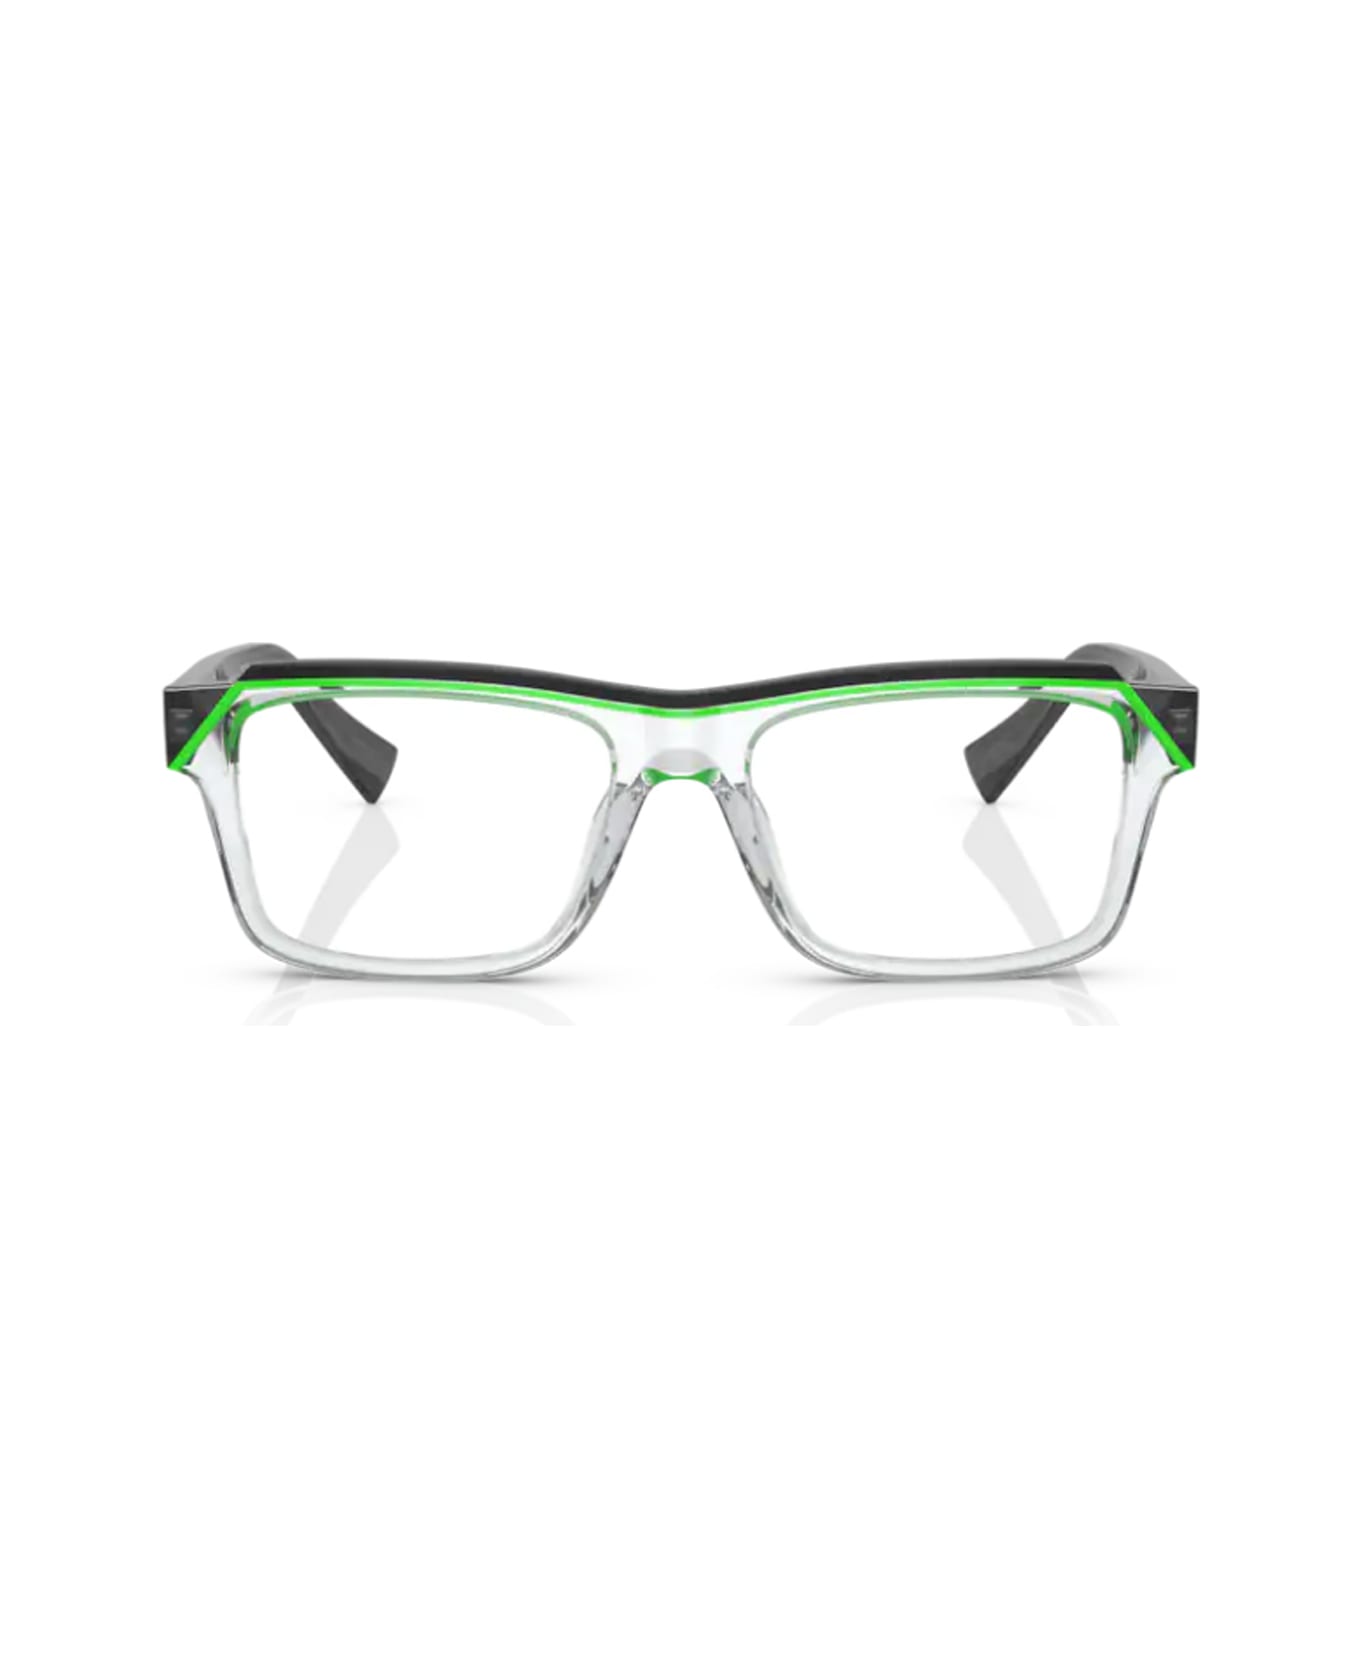 Alain Mikli A03150 Glasses - Verde